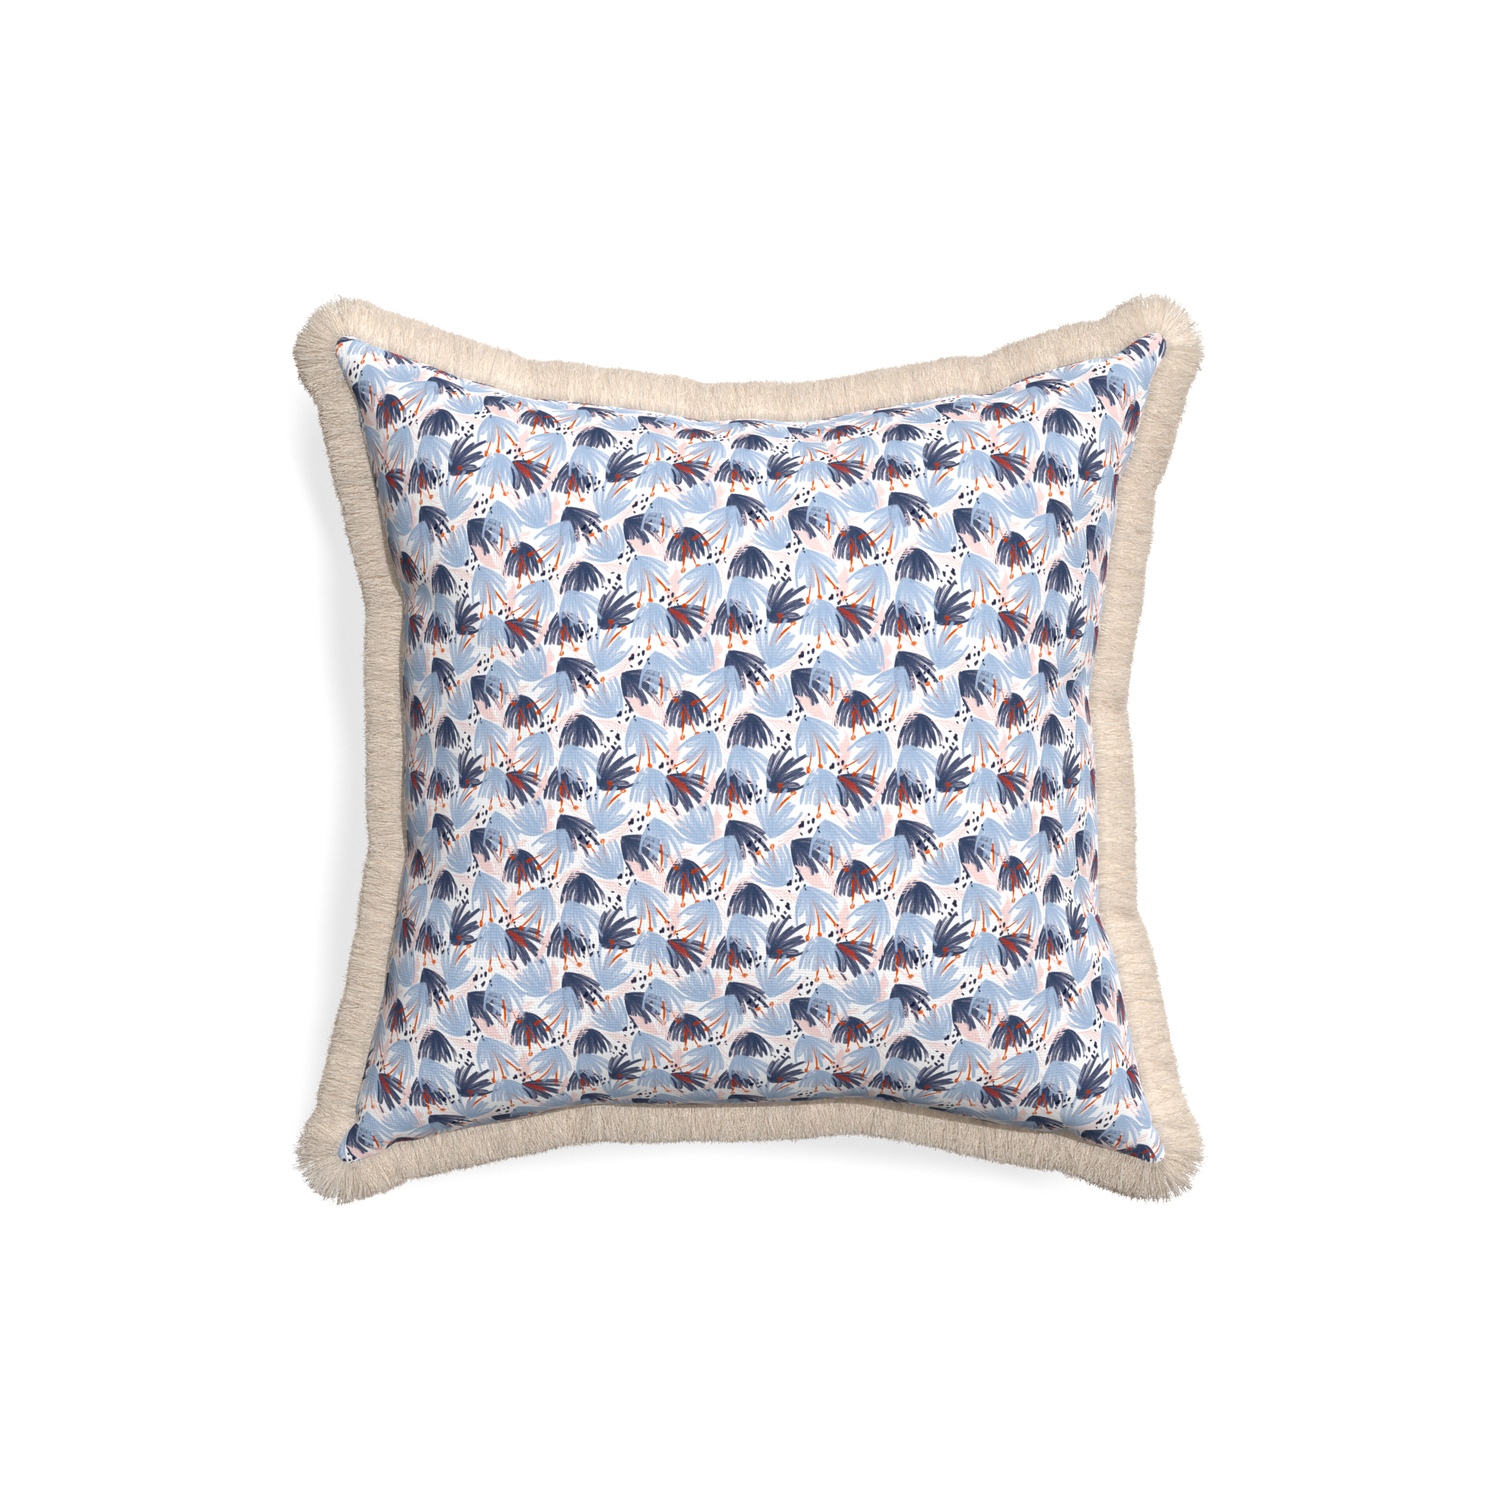 18-square eden blue custom pillow with cream fringe on white background